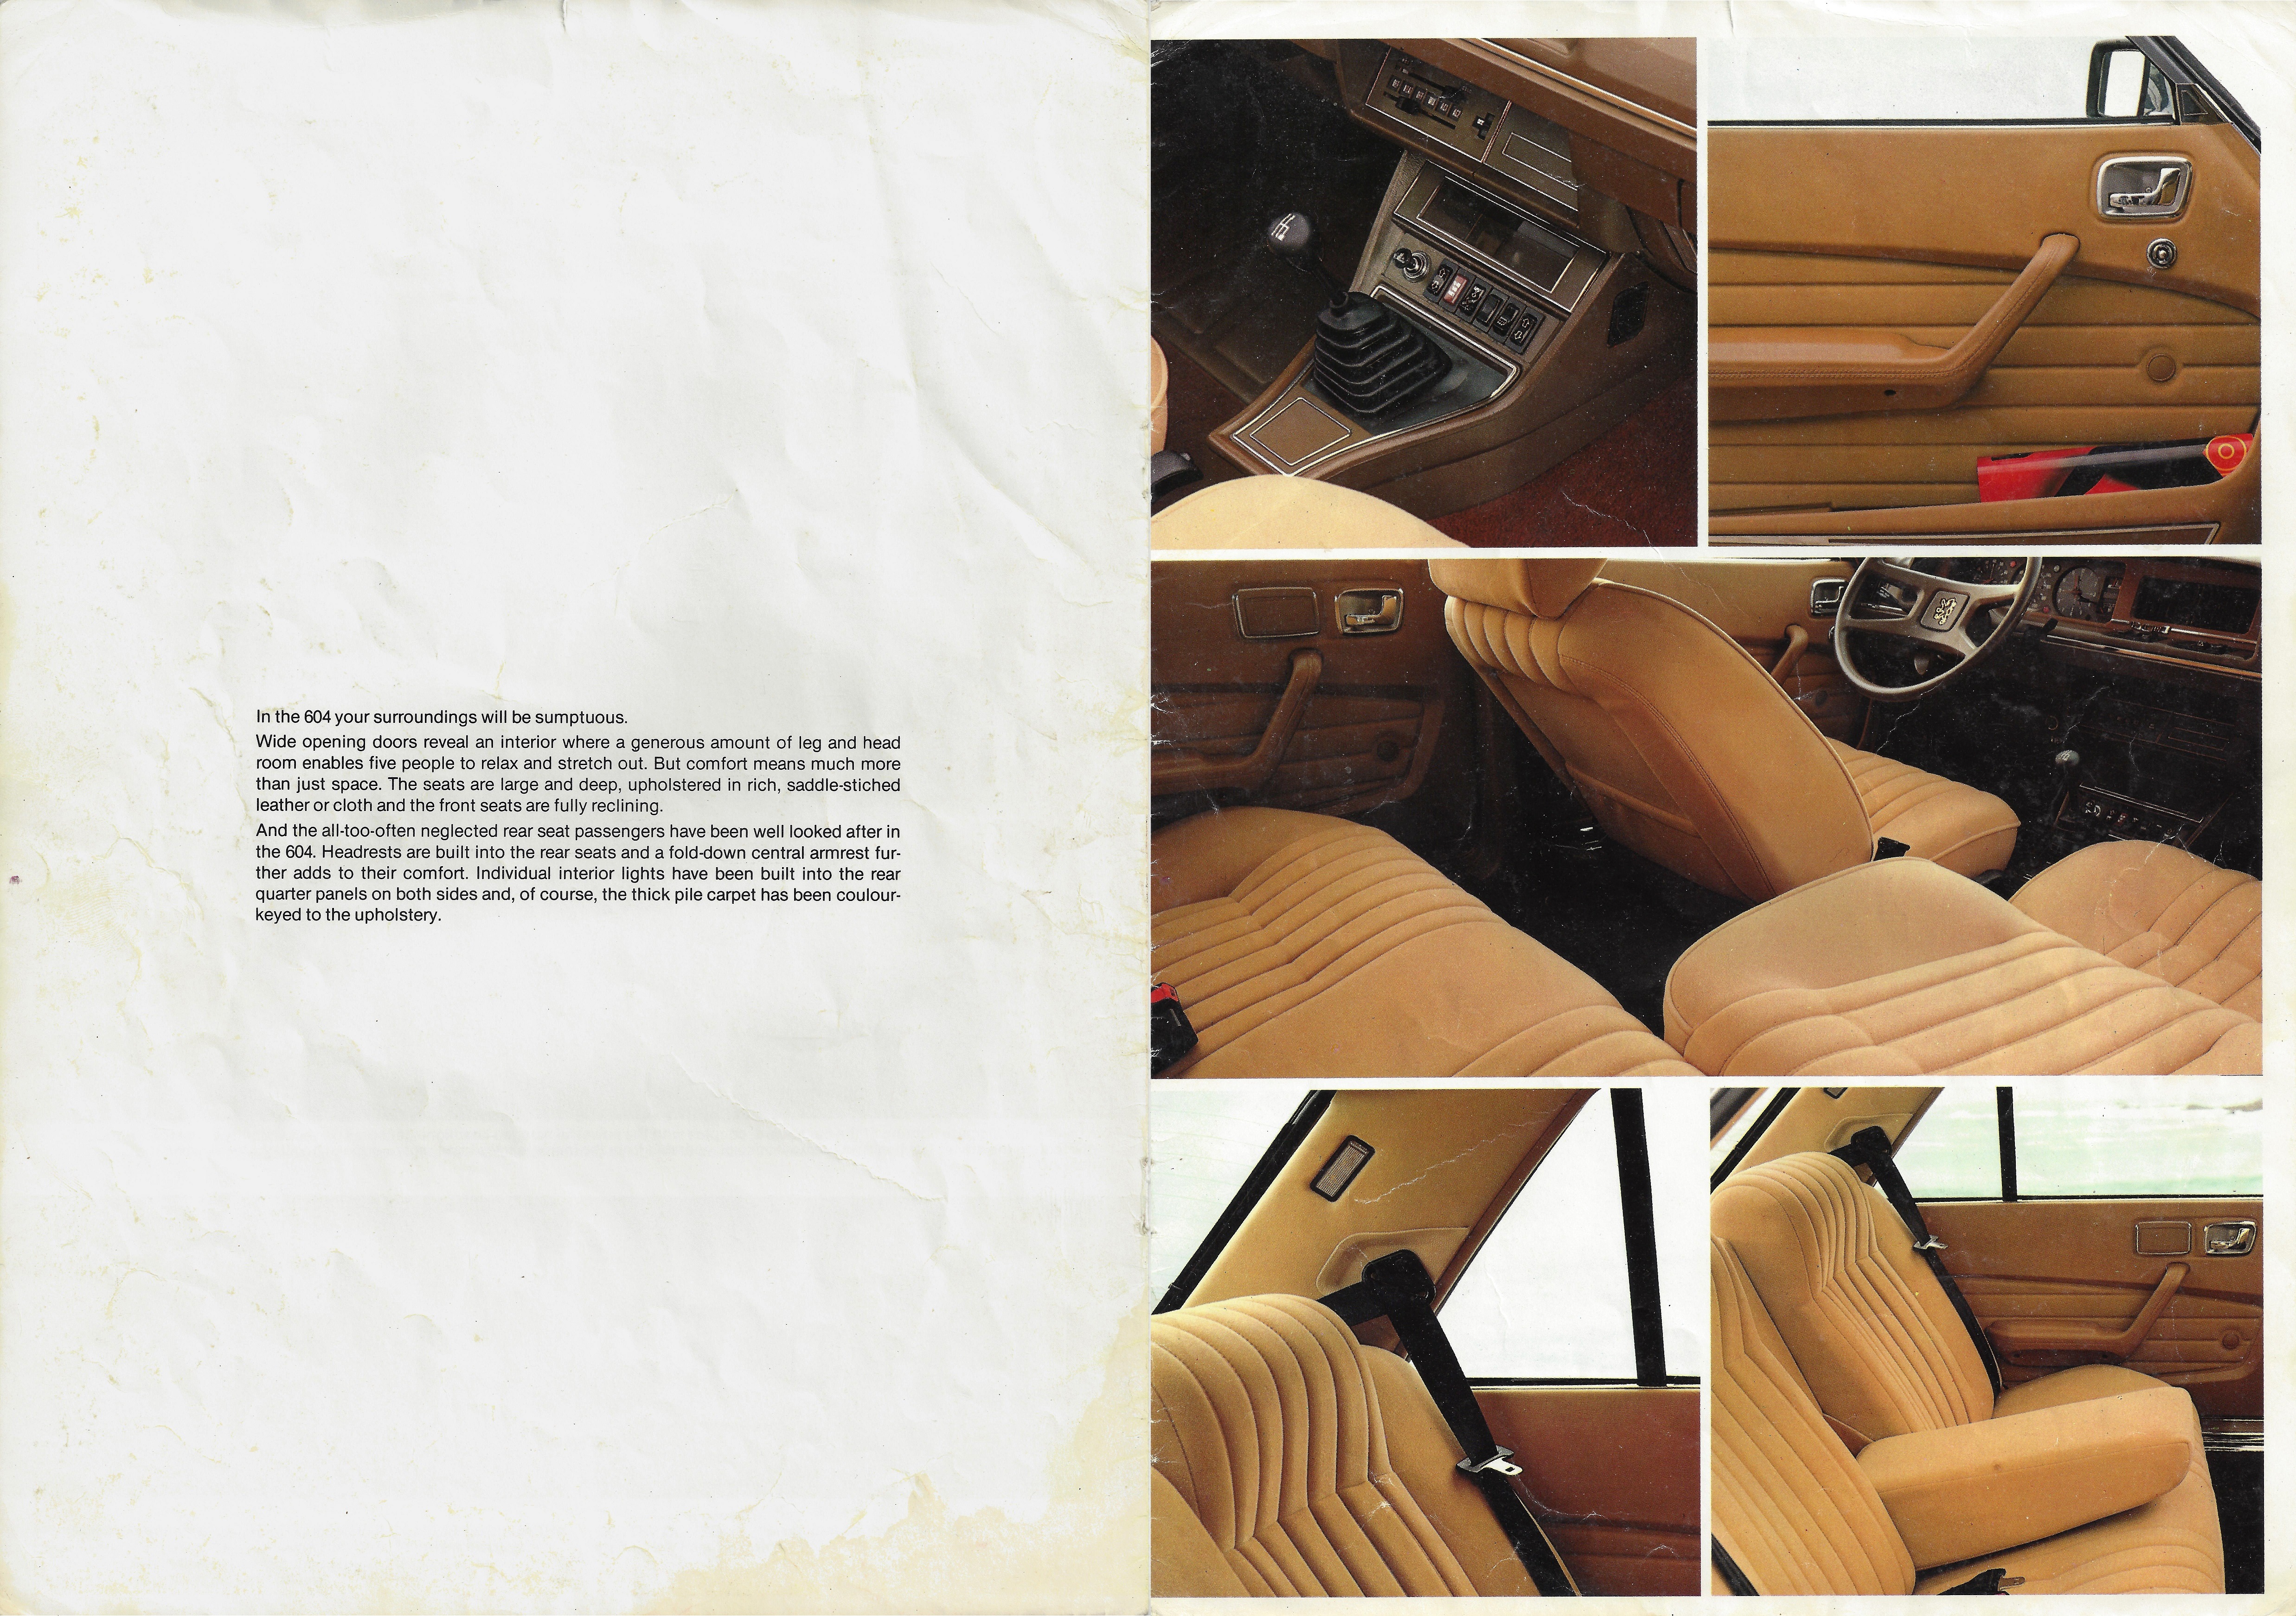 1979 Peugeot 604 Brochure Page 1